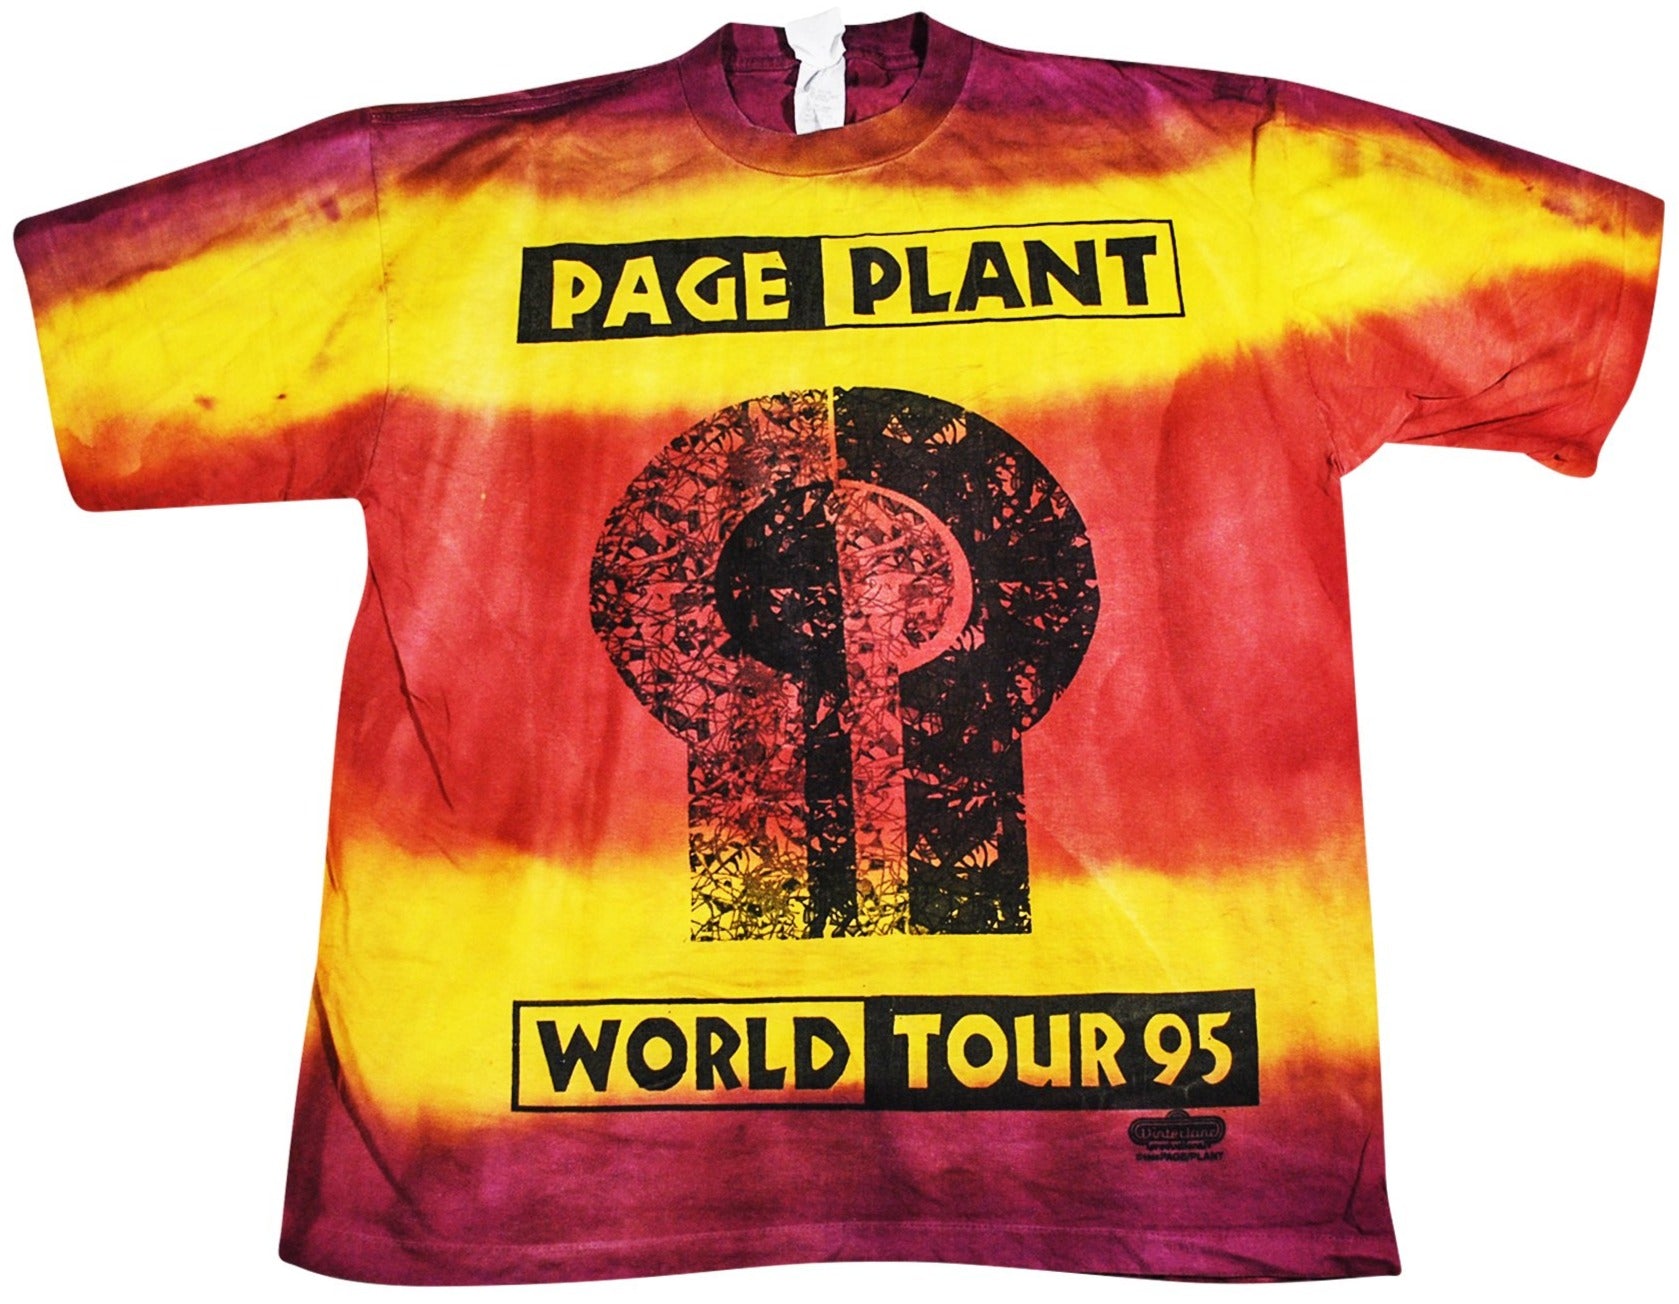 Vintage Jimmy Page Robert Plant 1995 World Tour Shirt Size X-Large